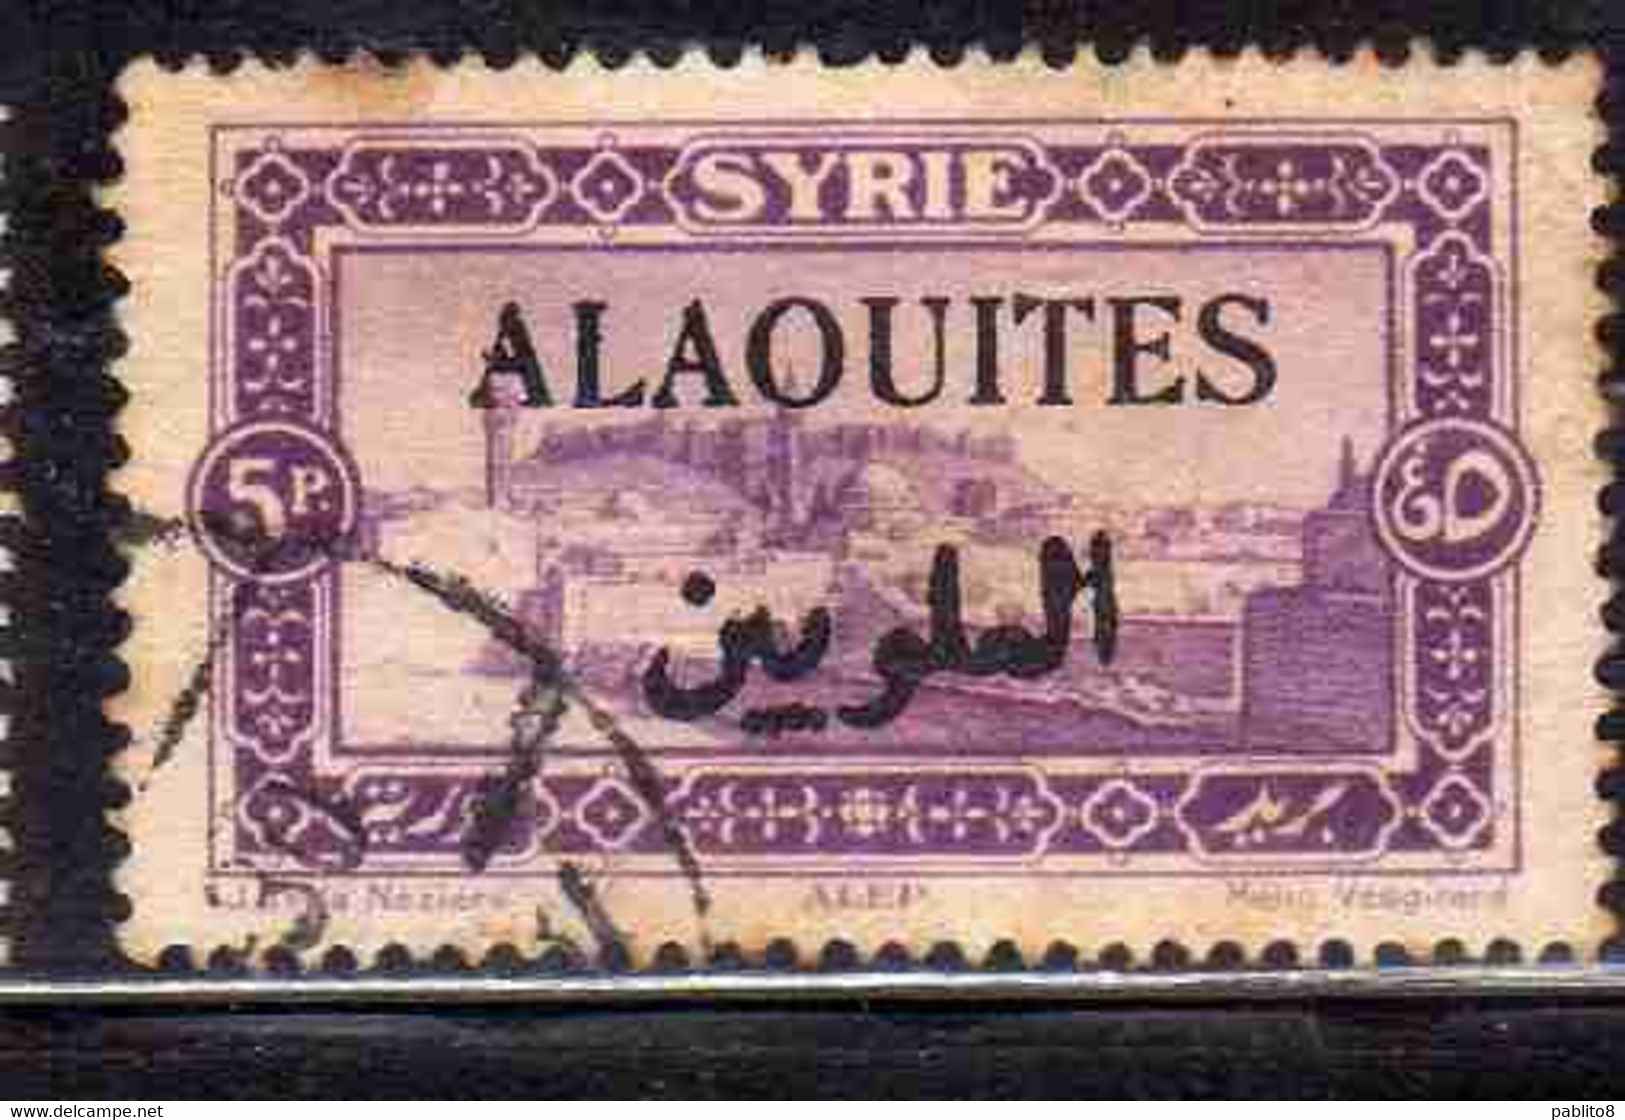 ALAOUITES SYRIA SIRIA ALAQUITES 1925 VIEW OF ALEPPO 5p USED USATO OBLITERE' - Gebraucht